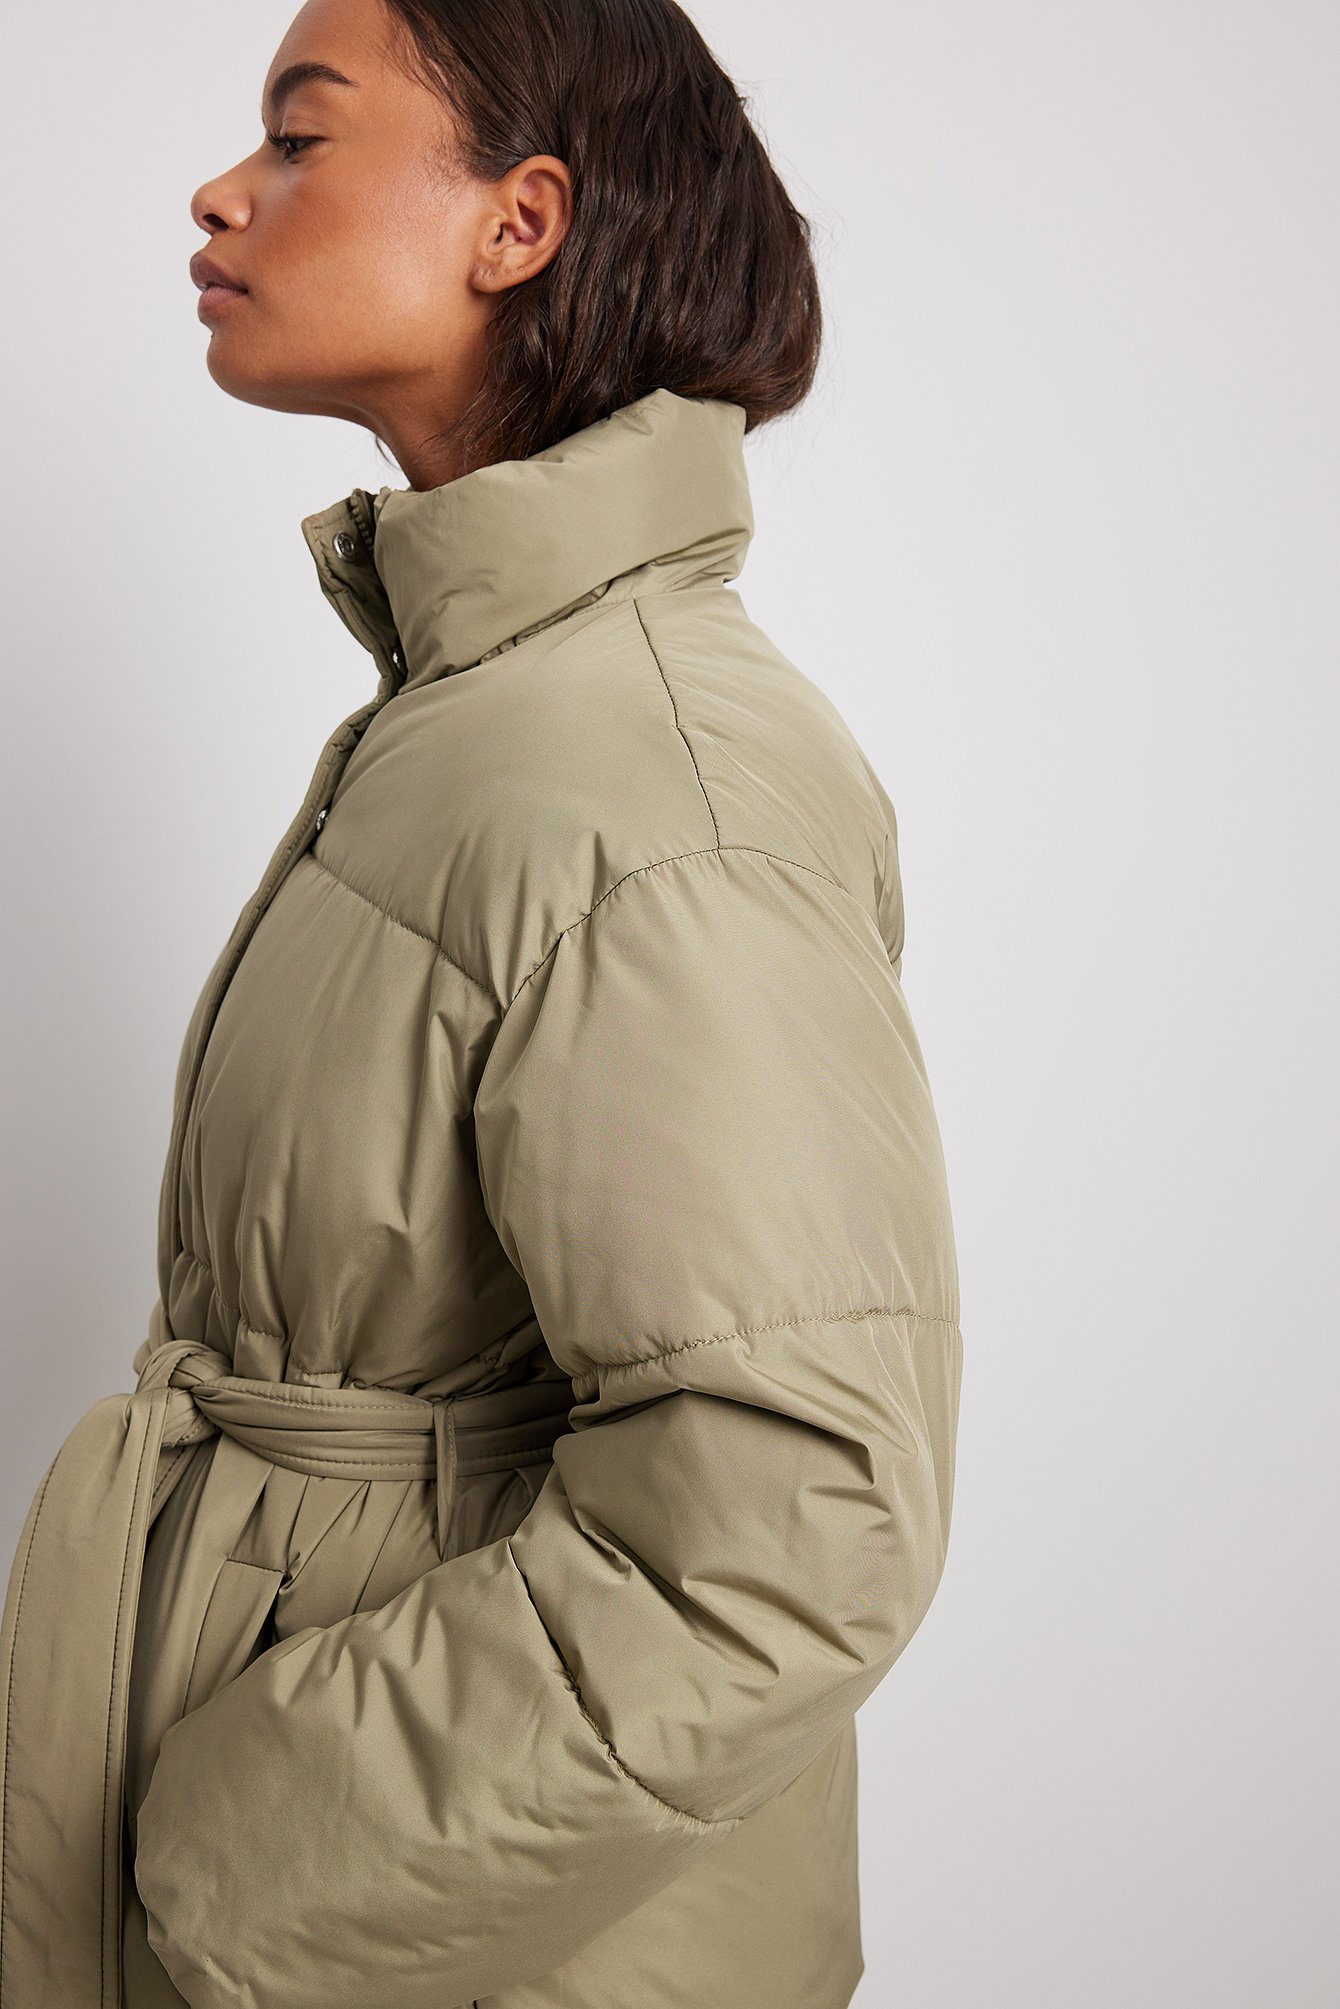 Qontrast Wollen jas volledige print casual uitstraling Mode Jassen Wollen jassen 